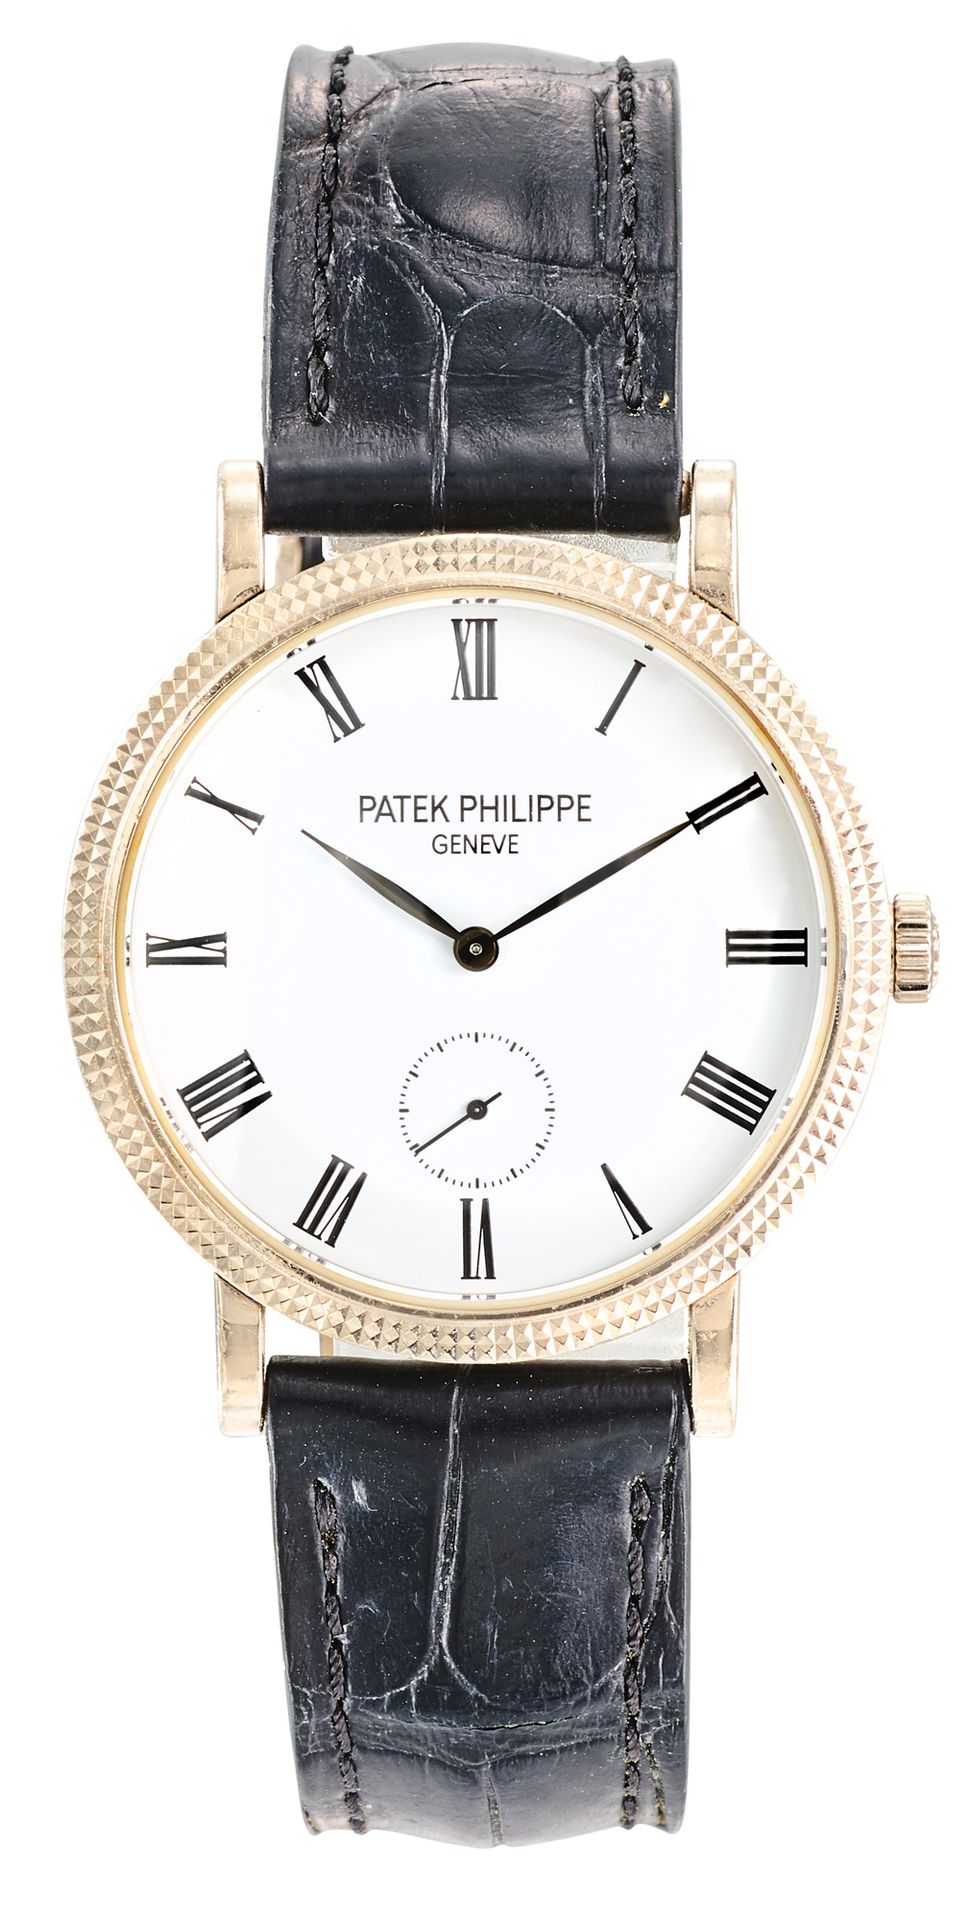 PATEK PHILIPPE Calatrava Clou de Paris" model ref. 7119G-010
Mixed watch, white &hellip;